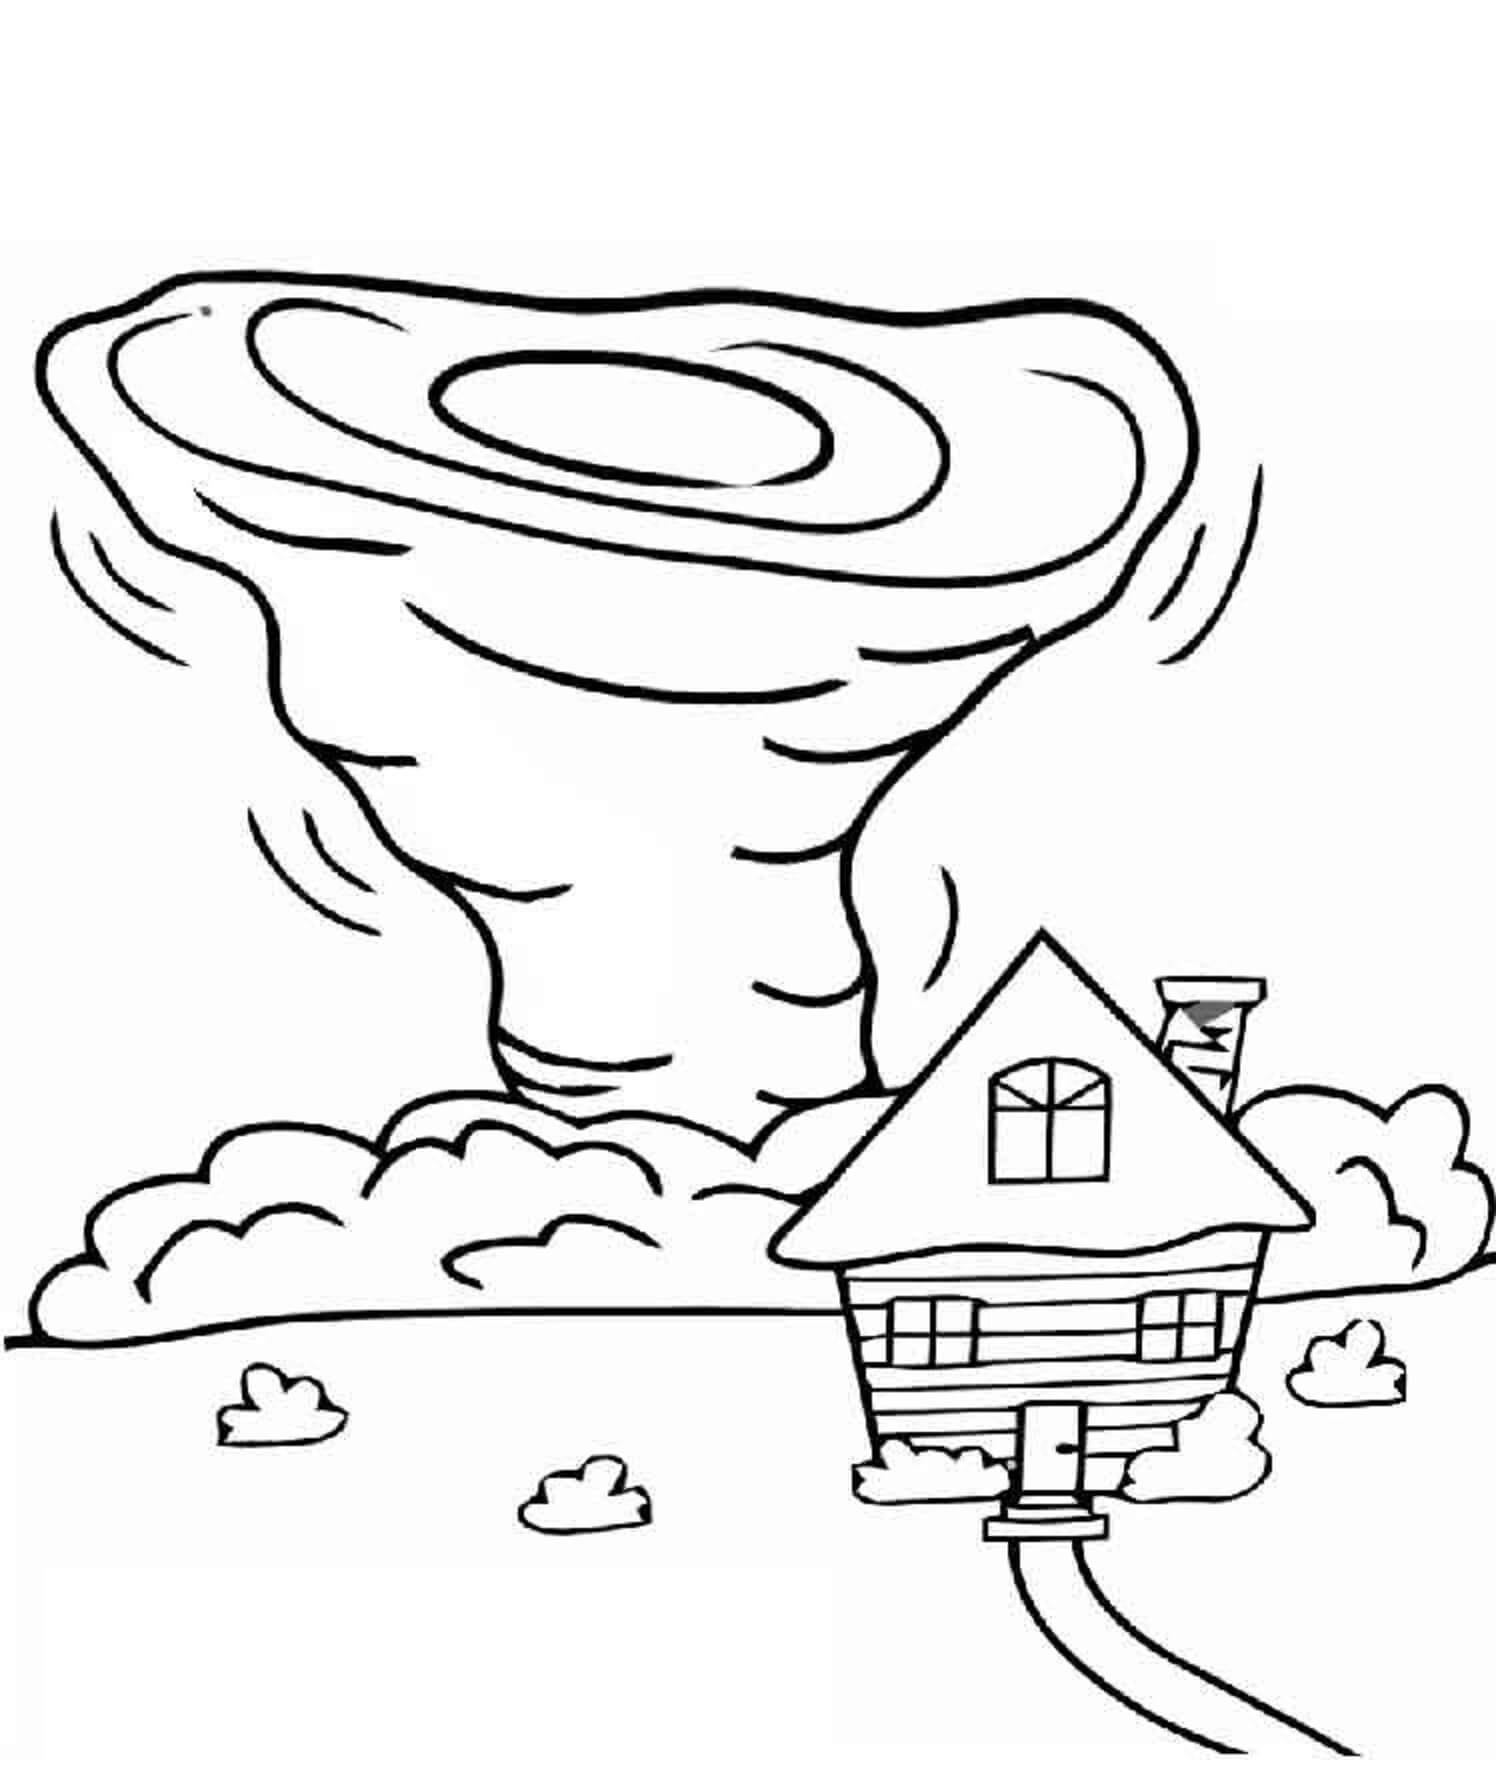 Tornado and House